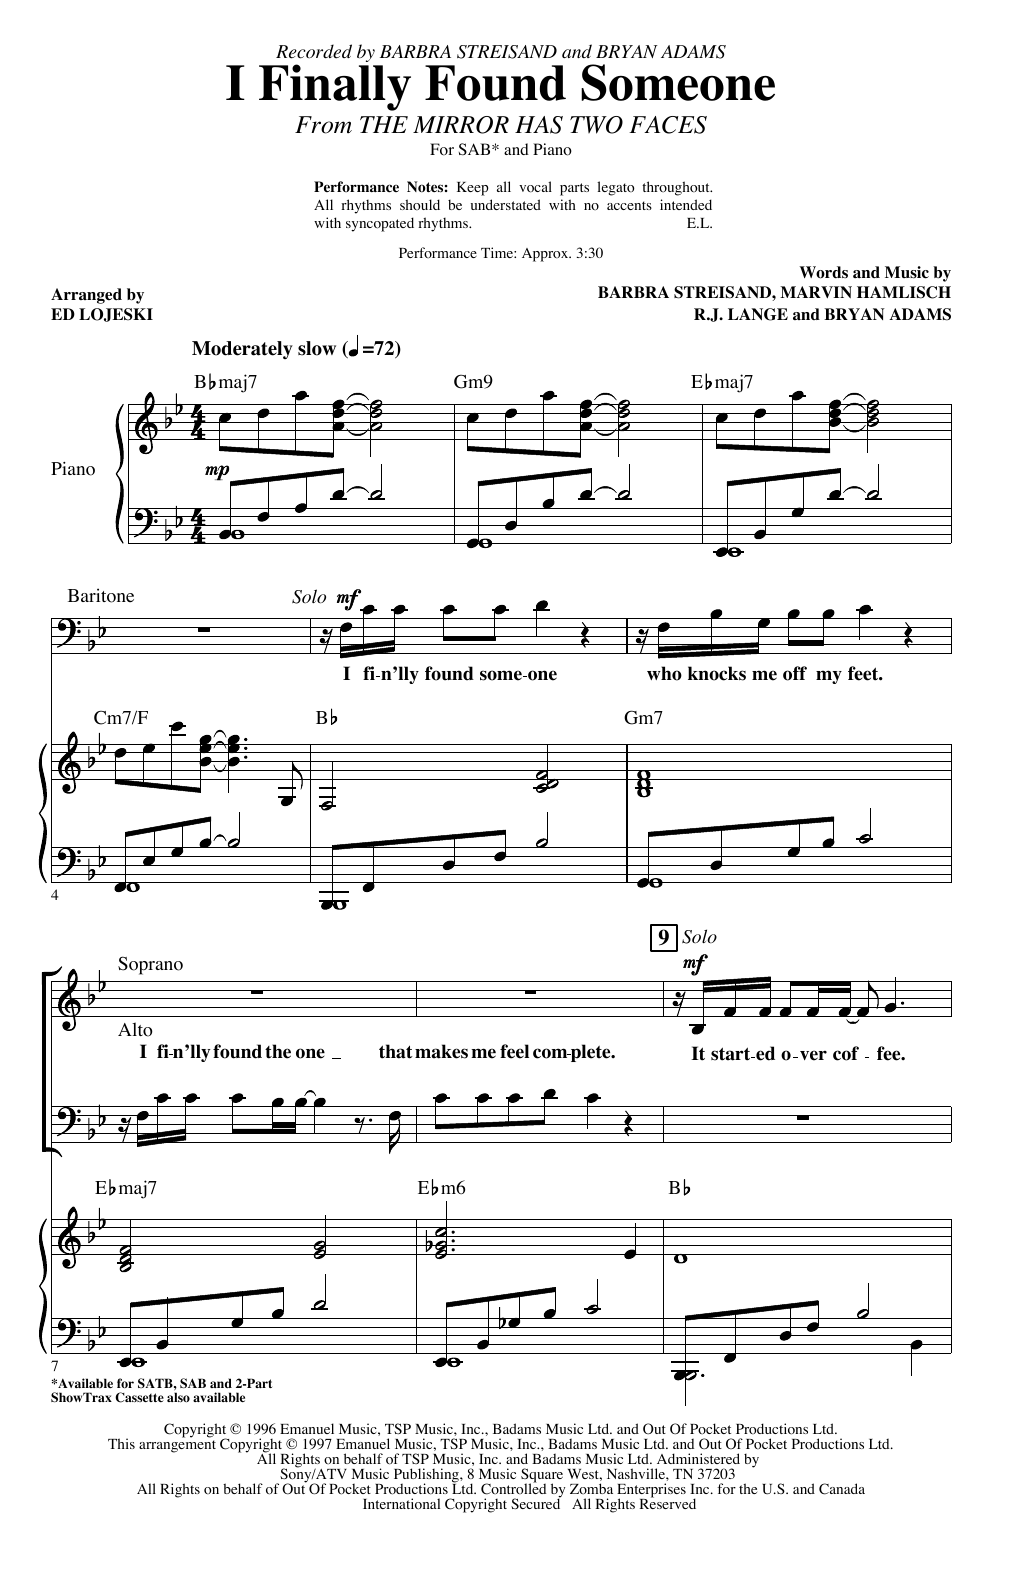 Barbra Streisand and Bryan Adams I Finally Found Someone (arr. Ed Lojeski) Sheet Music Notes & Chords for SATB Choir - Download or Print PDF